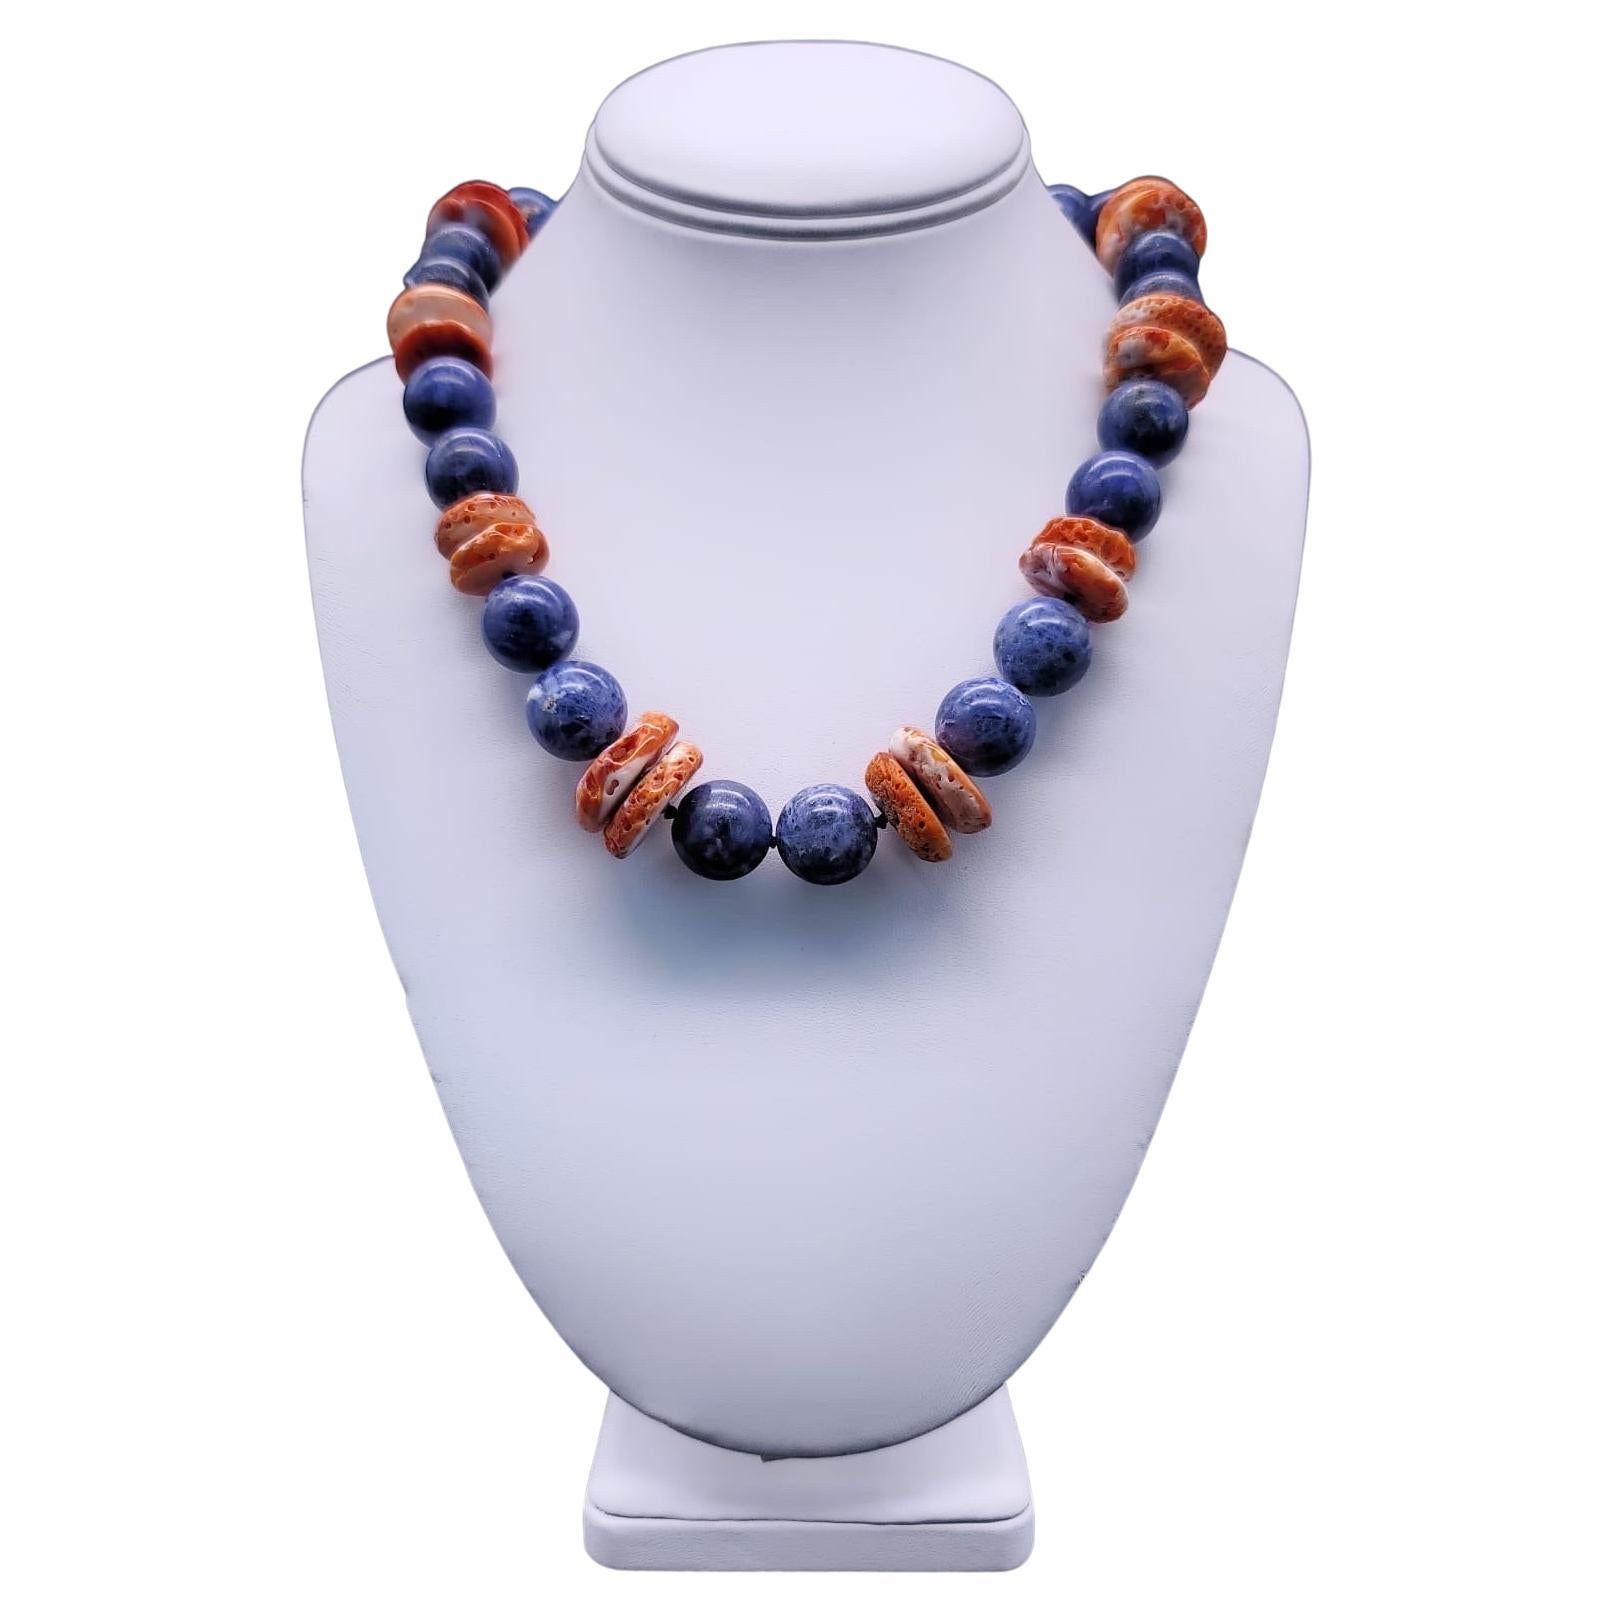 A.Jeschel Blue Coral necklace with a signature clasp.